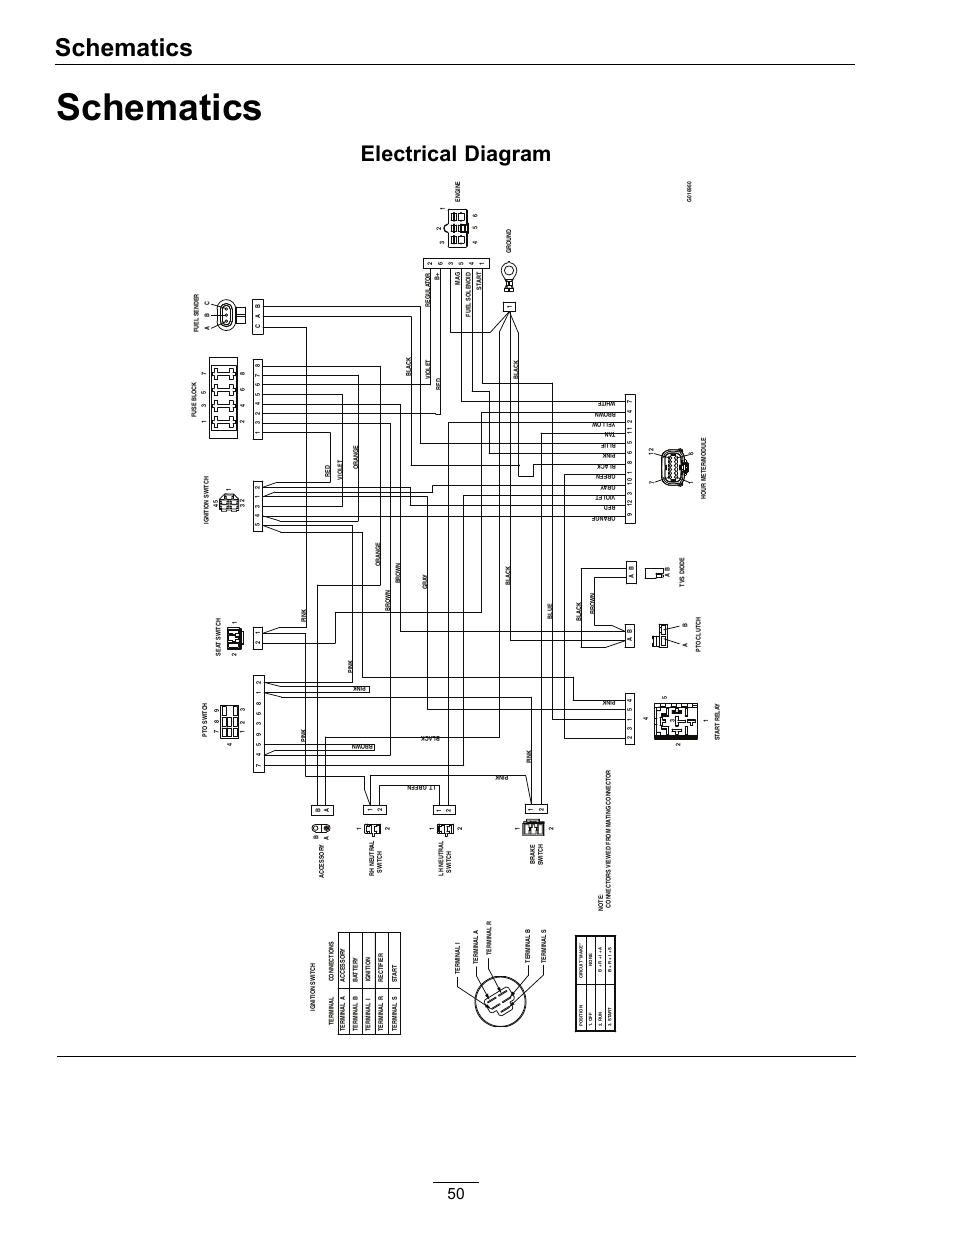 wiring diagram for a 480/277v 3 phase to 208/120v transformer